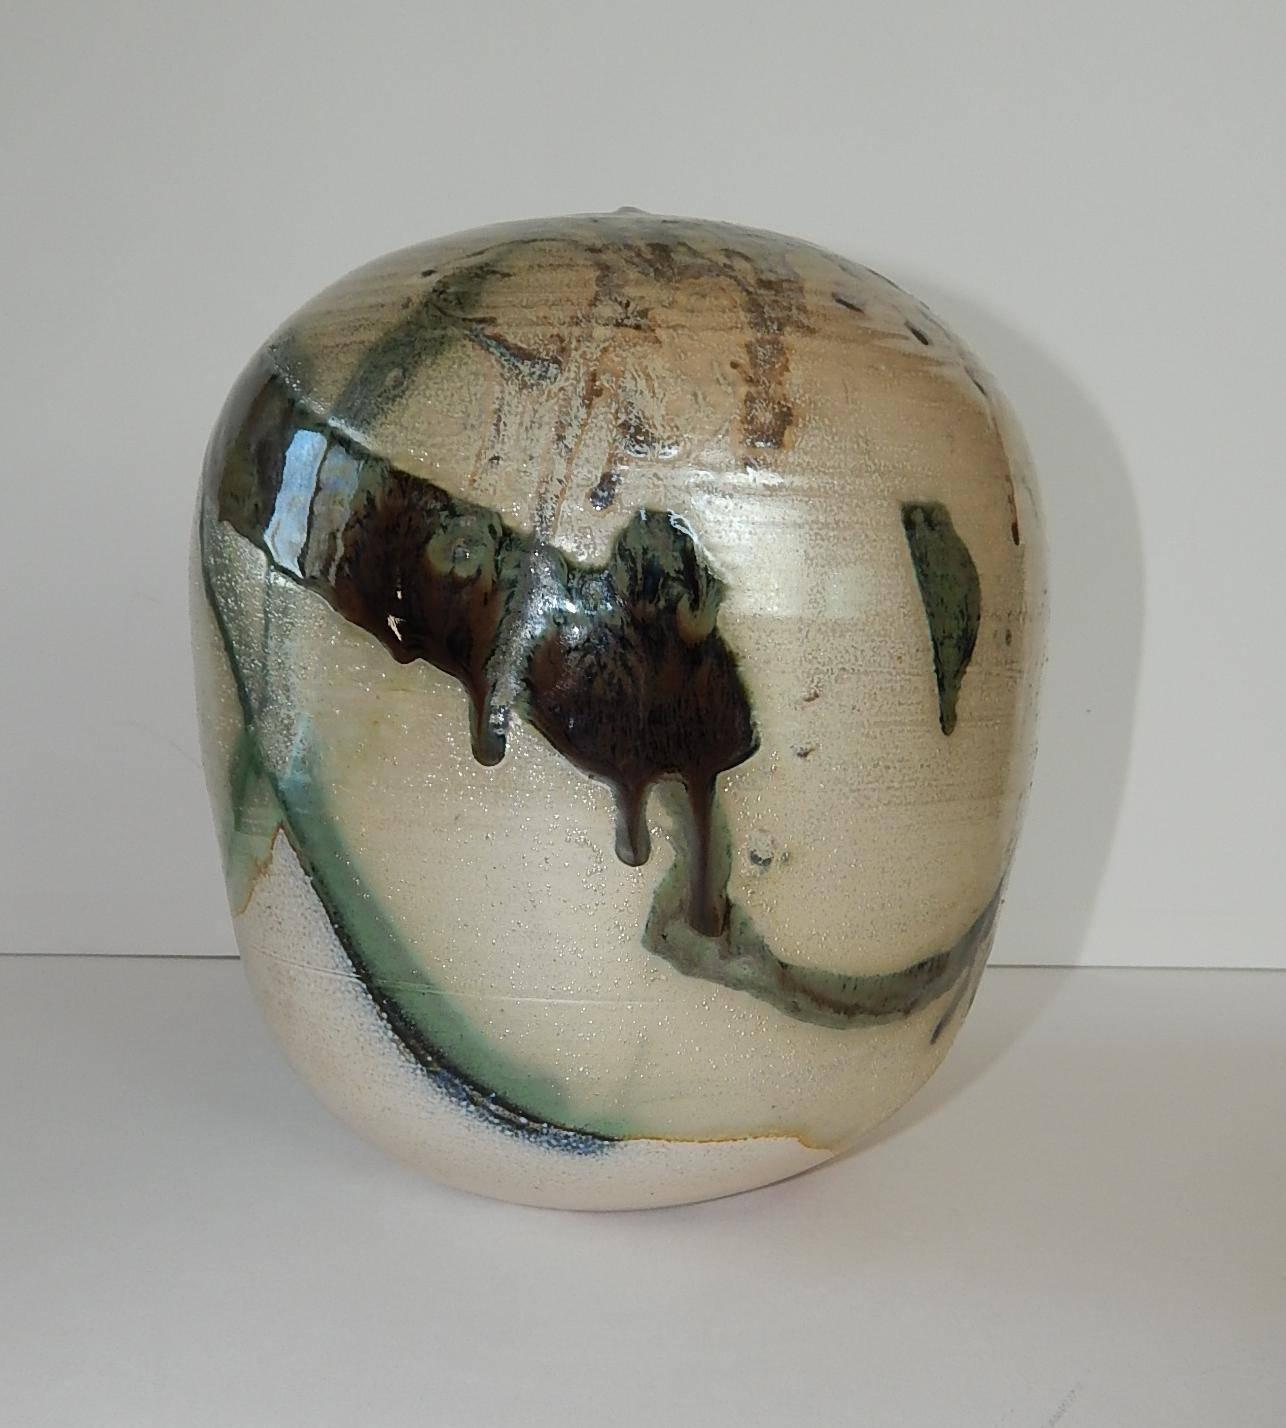 American Large Toshiko Takaezu Studio Ceramic Moon Pot with Rattle